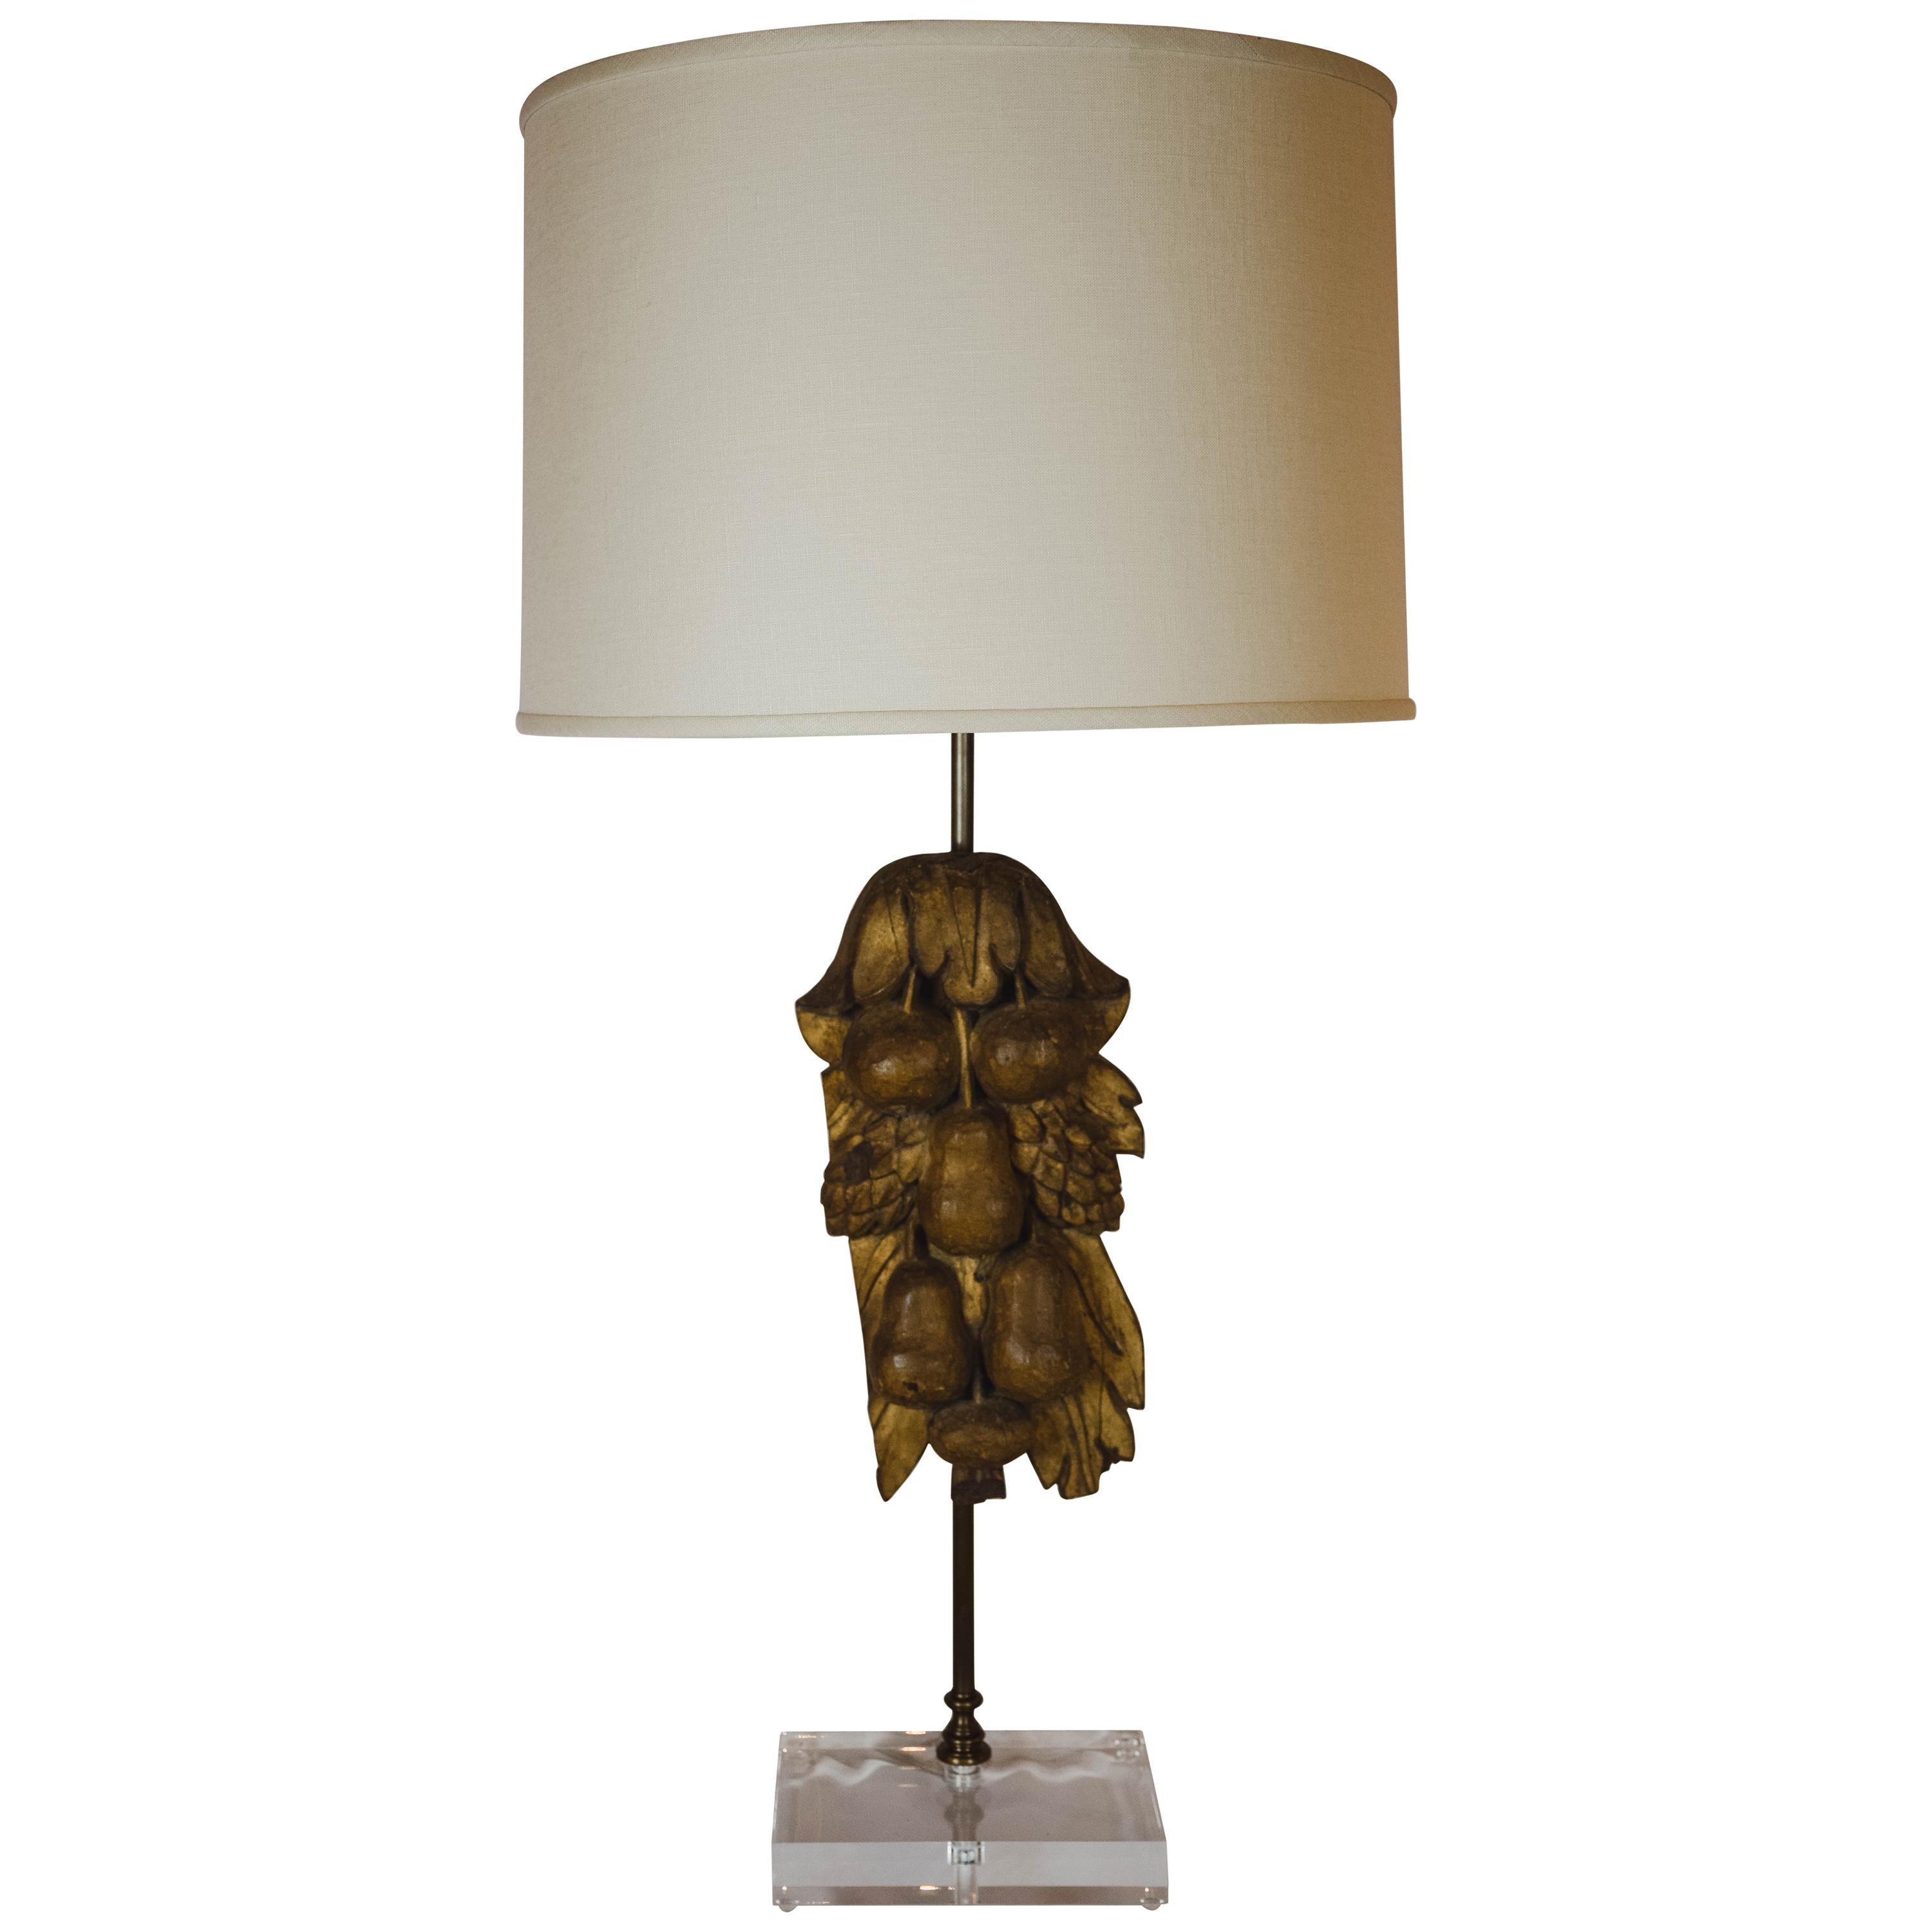 Lamp Designed with Antique Portuguese Architectural Element